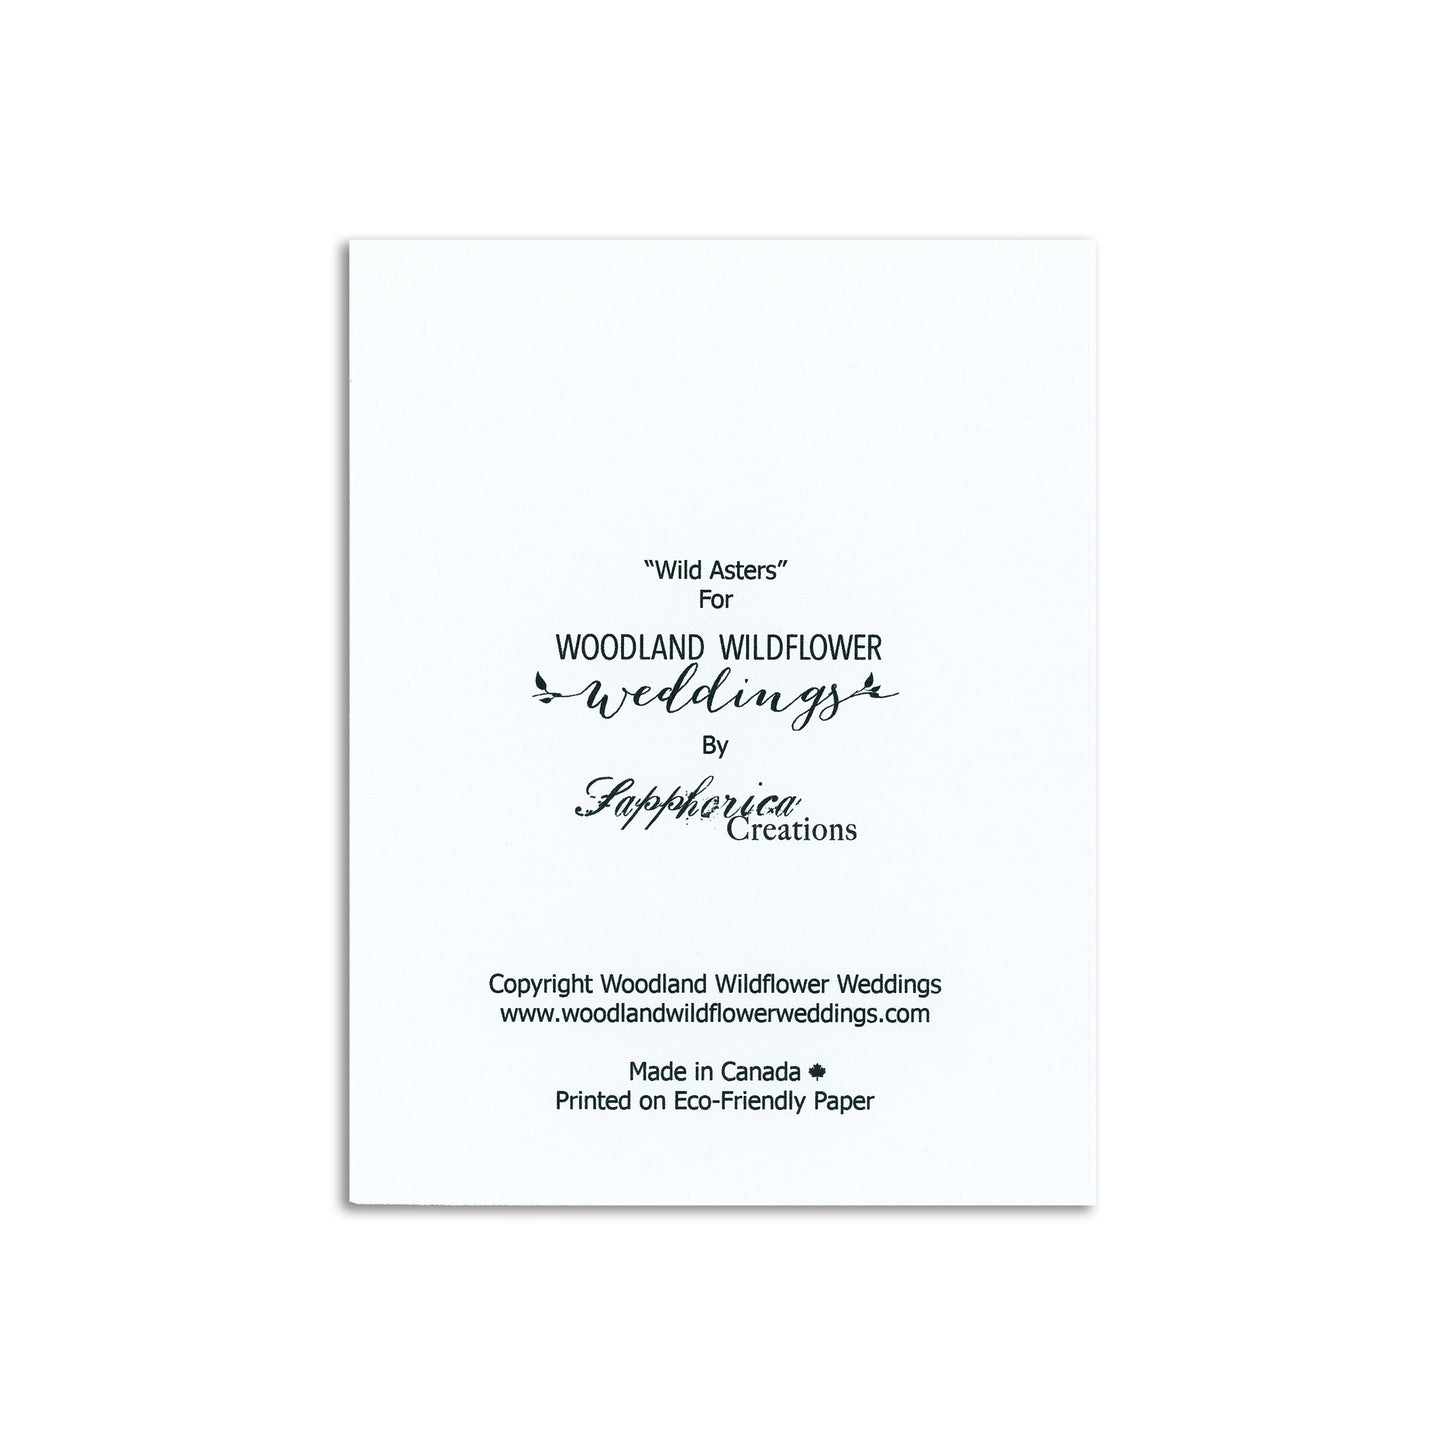 Woodland Wildflower x Sapphorica Creations- Wild Asters Art Card - Sapphorica Creations 